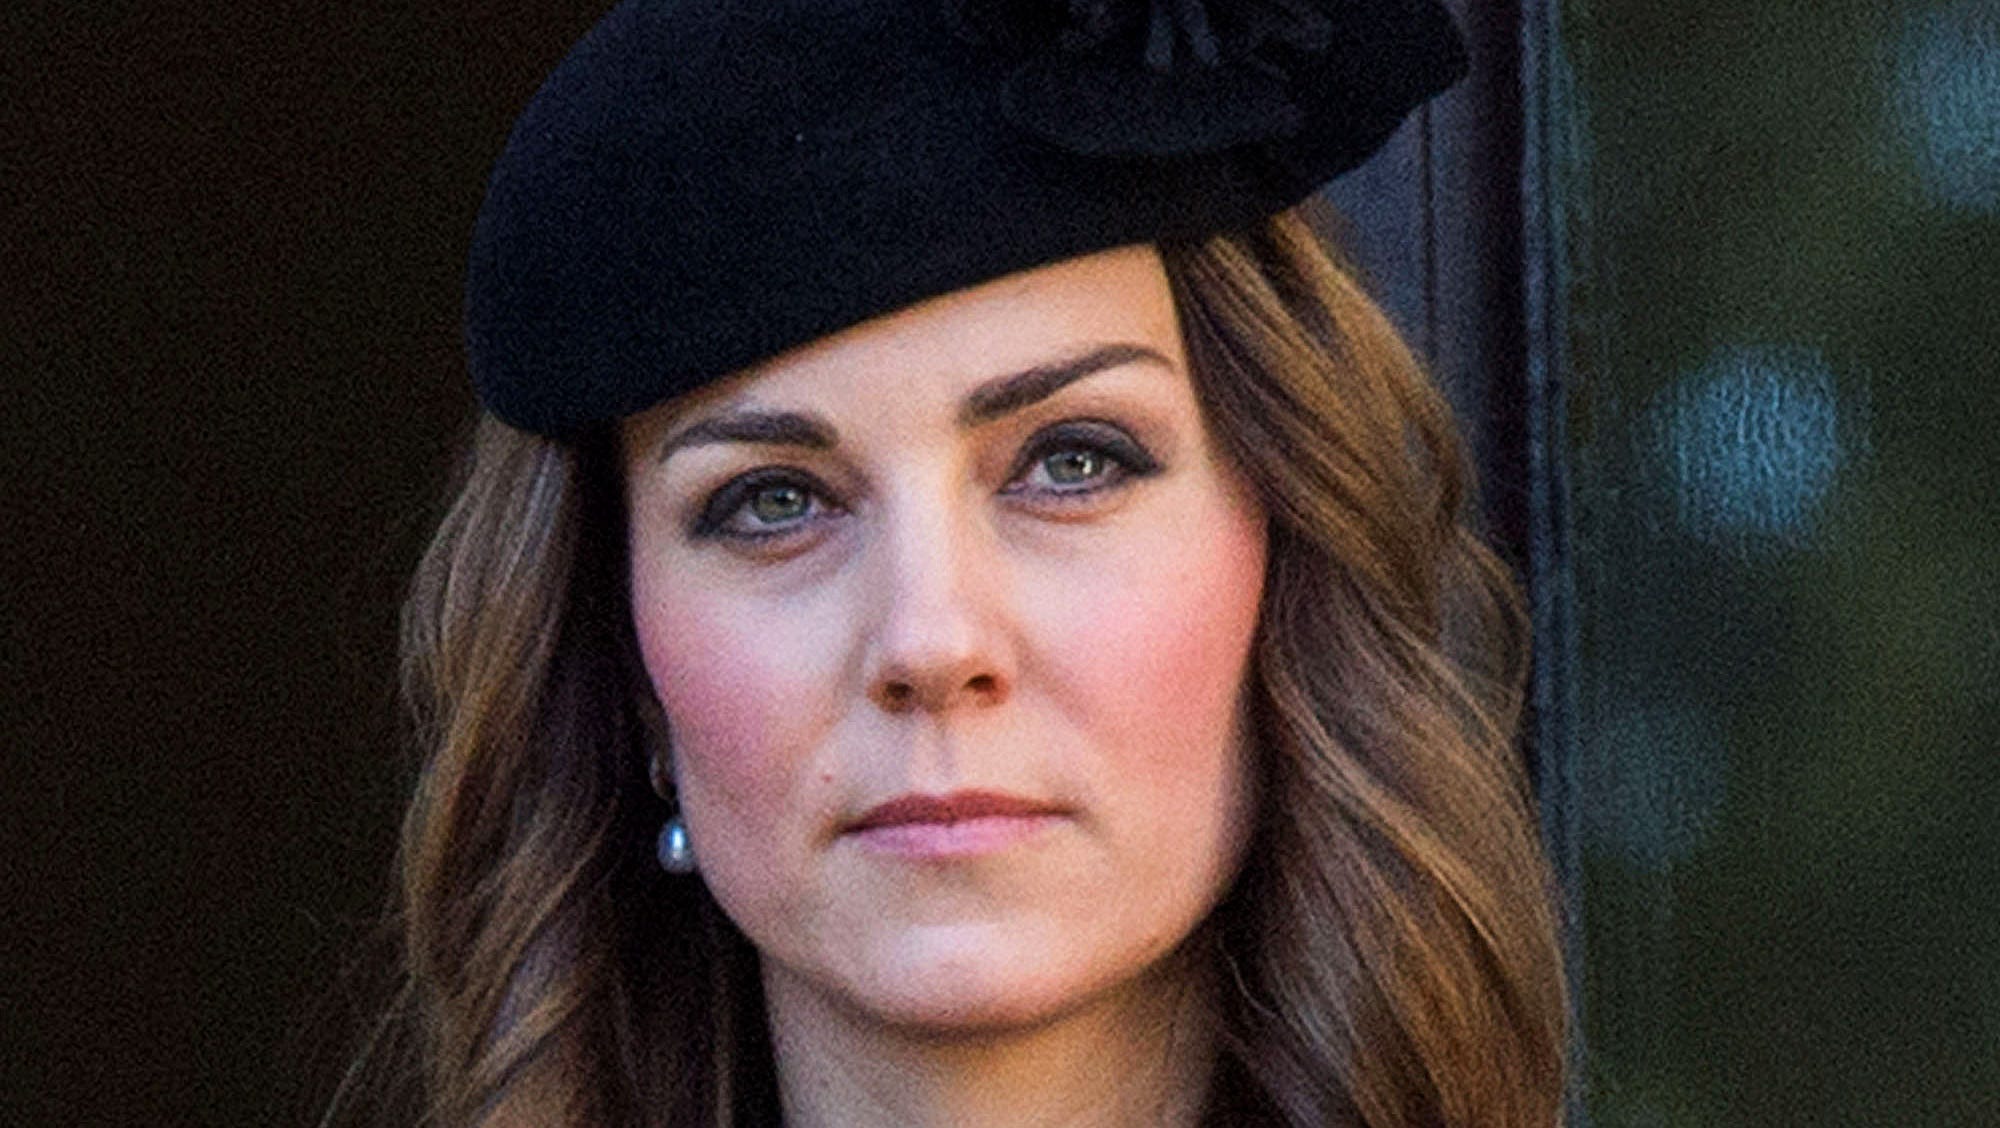 Kate Middleton on phone-hacker target list, court hears